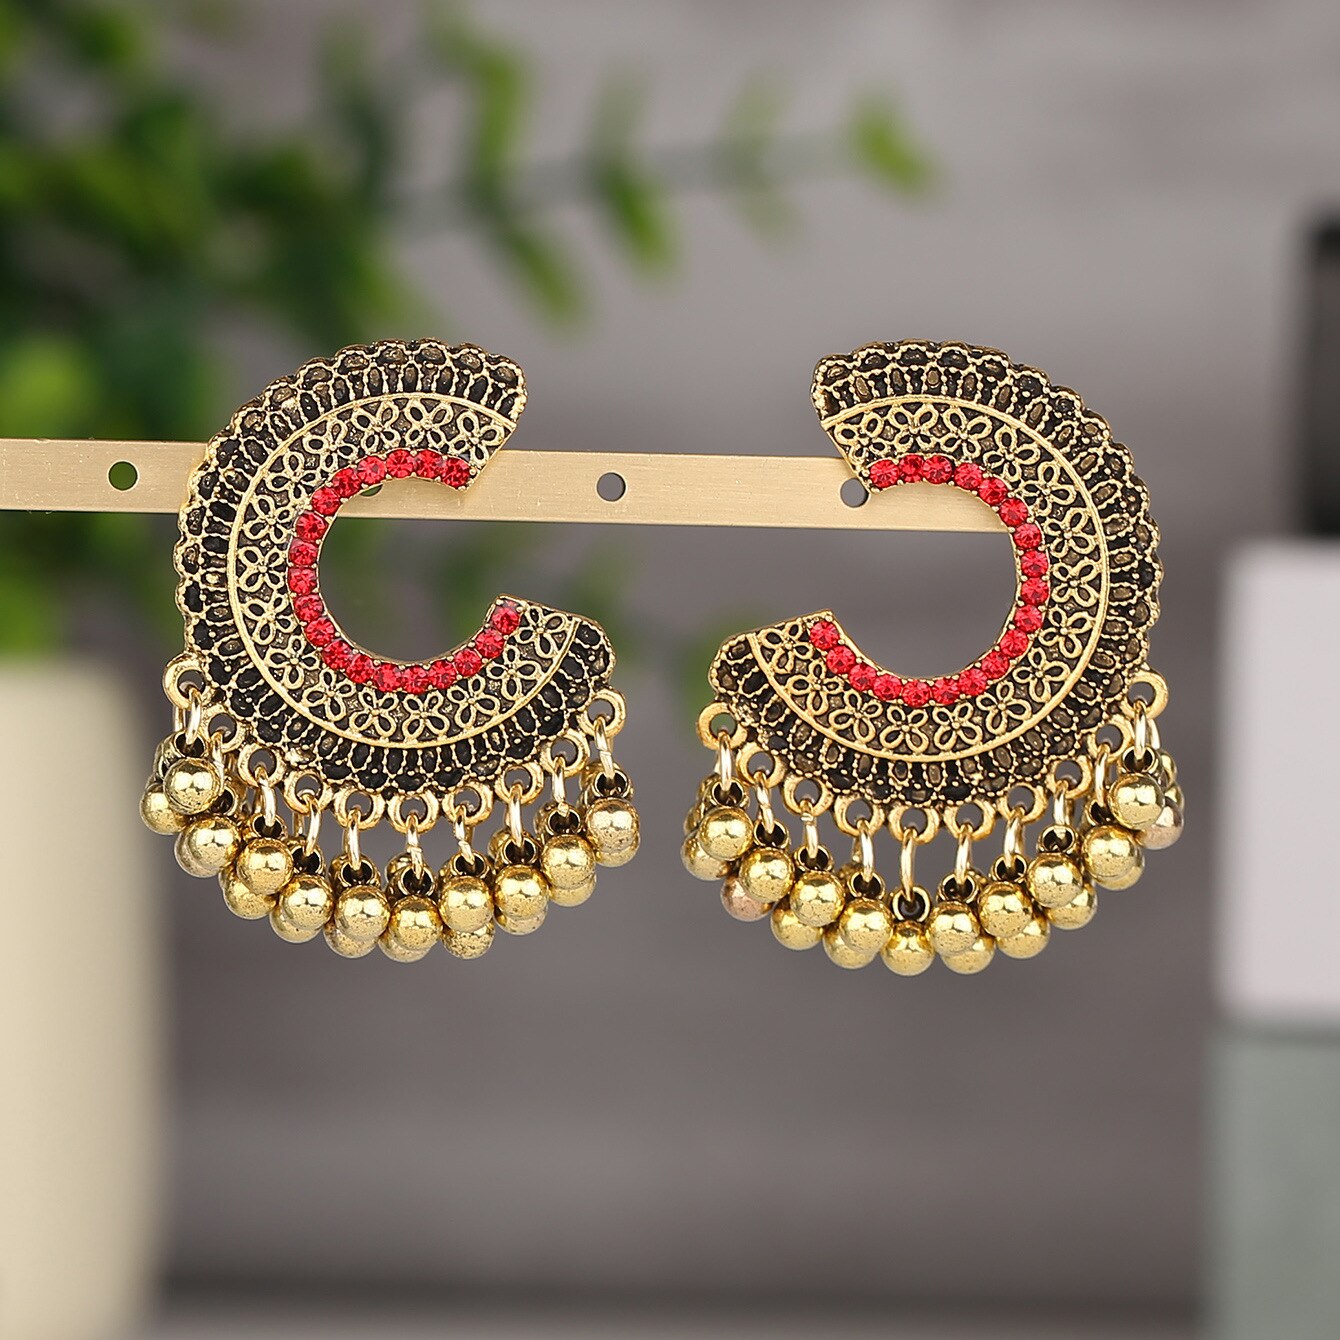 Vintage-C-Shape-Indian-Earrings-Boho-Gold-Color-Alloy-Bollywood-Oxidized-Earrings-For-Women-Ethnic-Z-1005003739518691-2